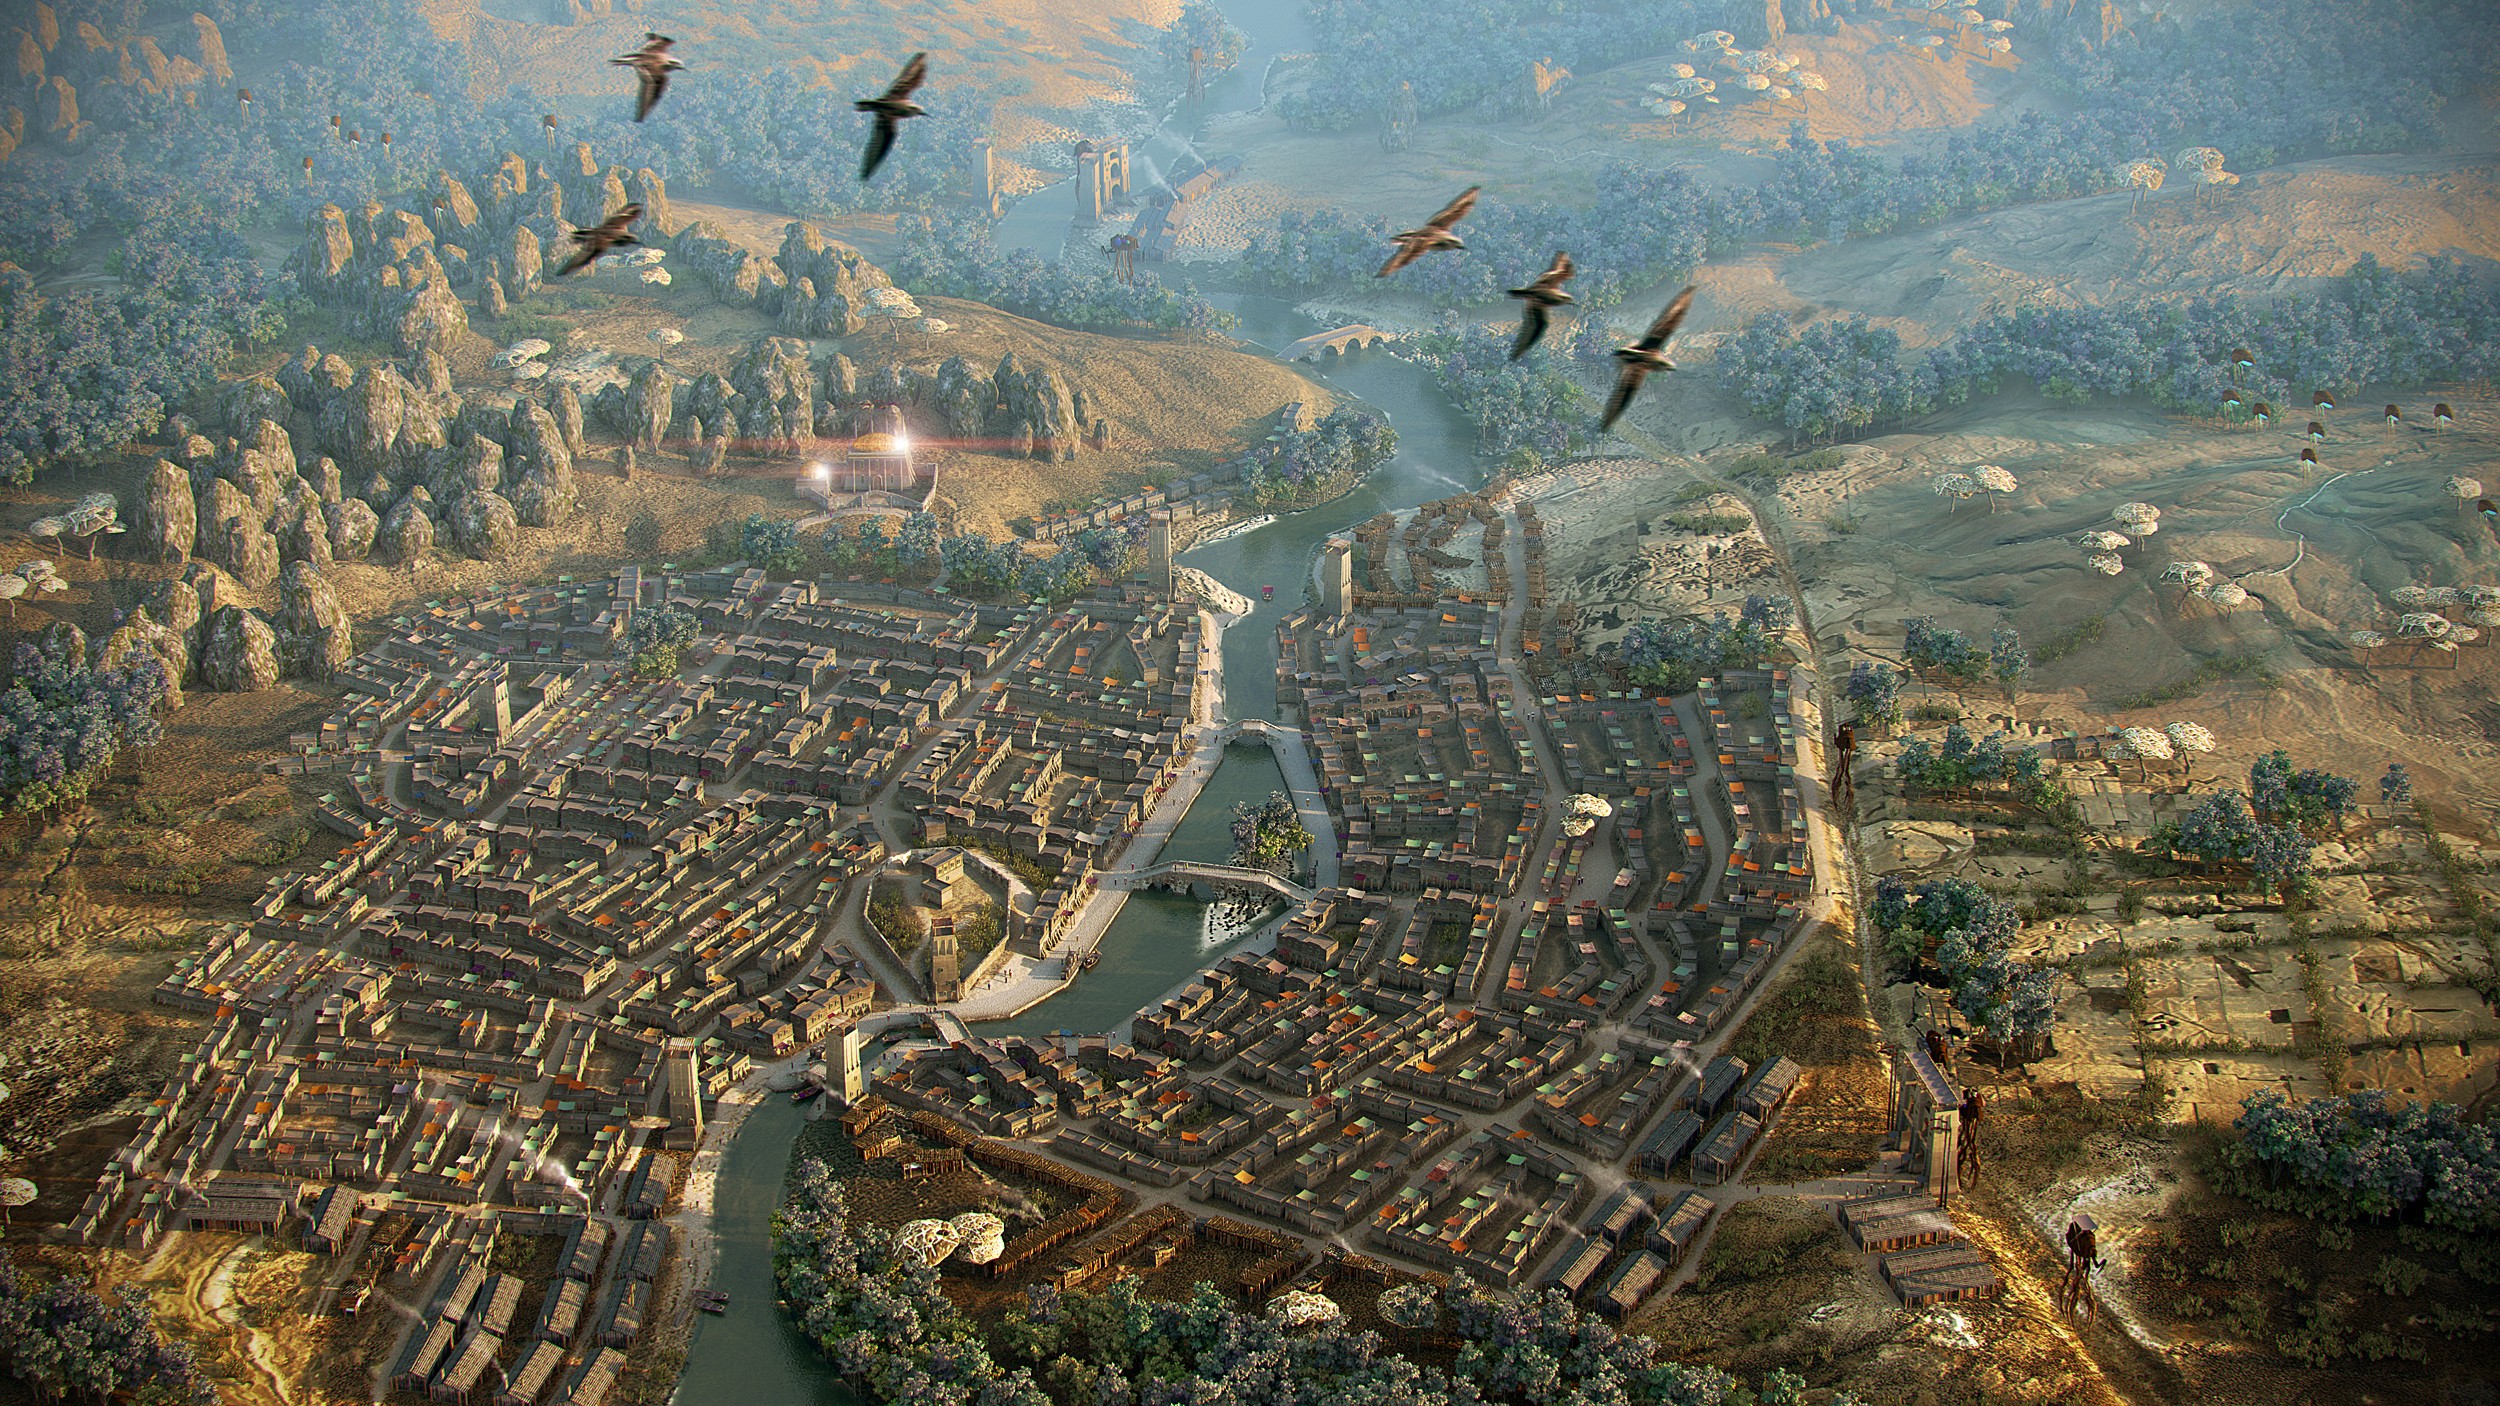 General 2500x1406 town river The Elder Scrolls III: Morrowind fantasy city fantasy town digital art